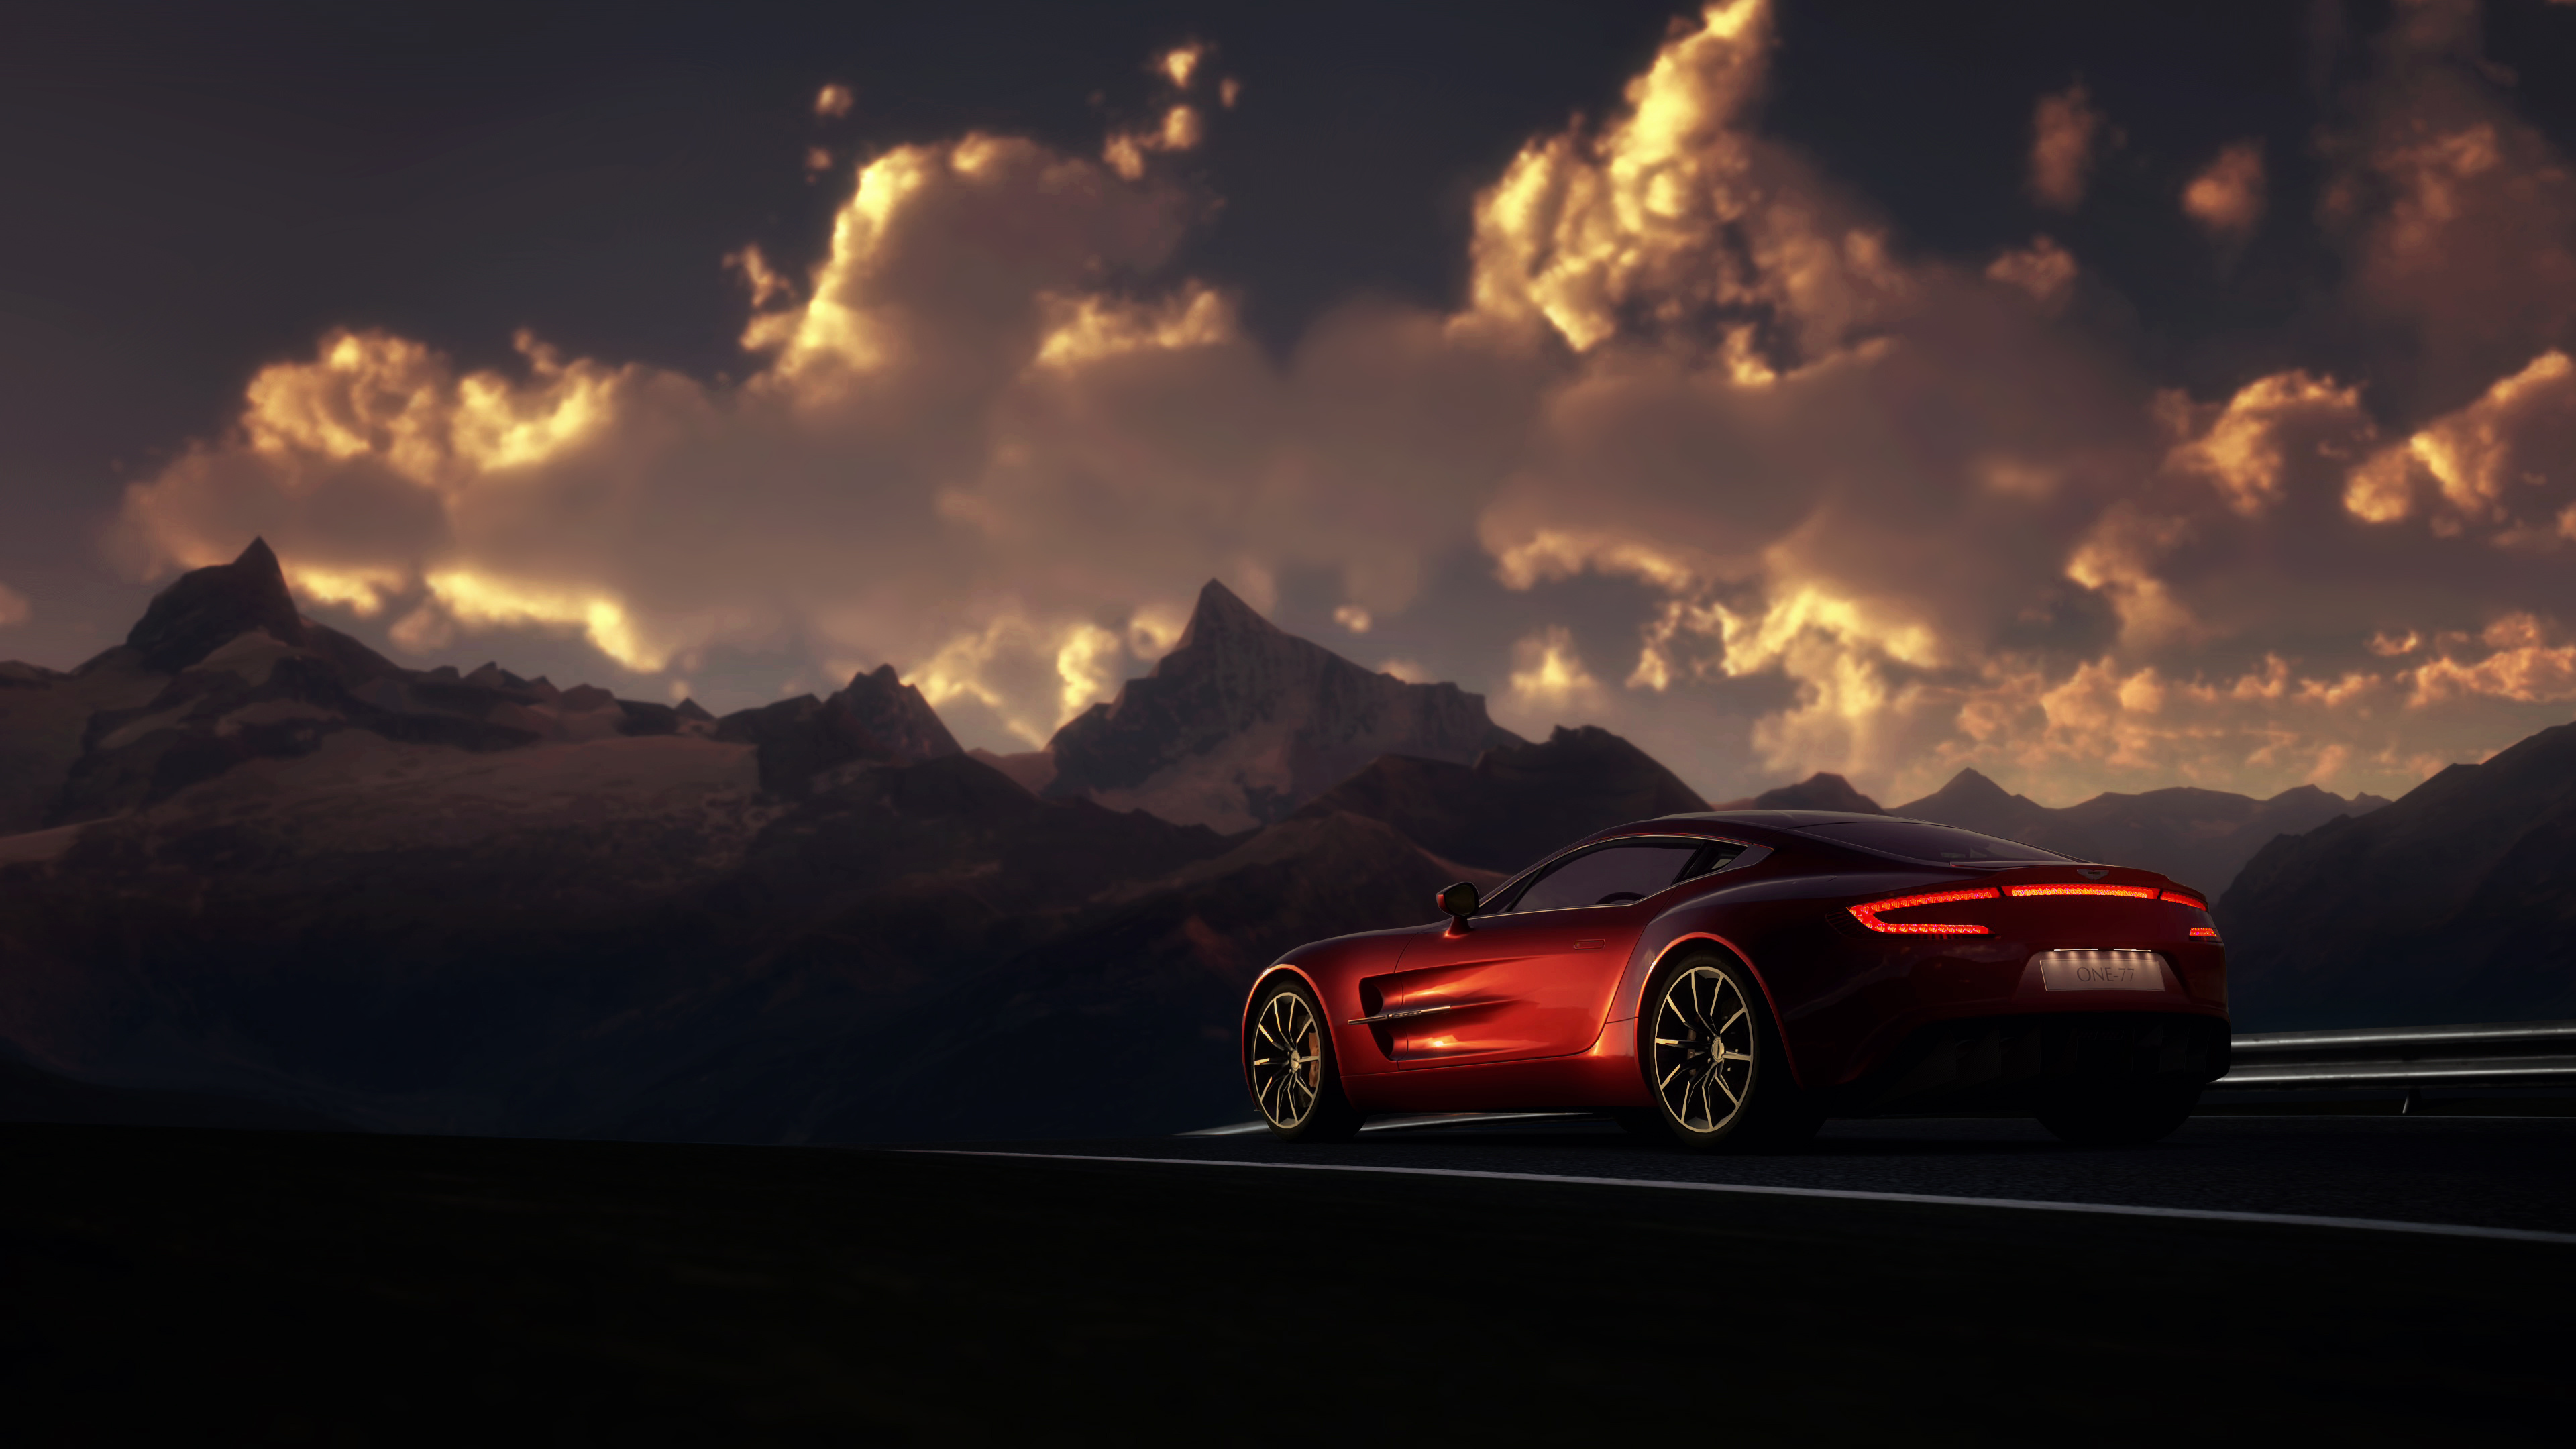 Aston Martin One-77, Gran Turismo 6 HD game, Luxury car beauty, 3840x2160 4K Desktop